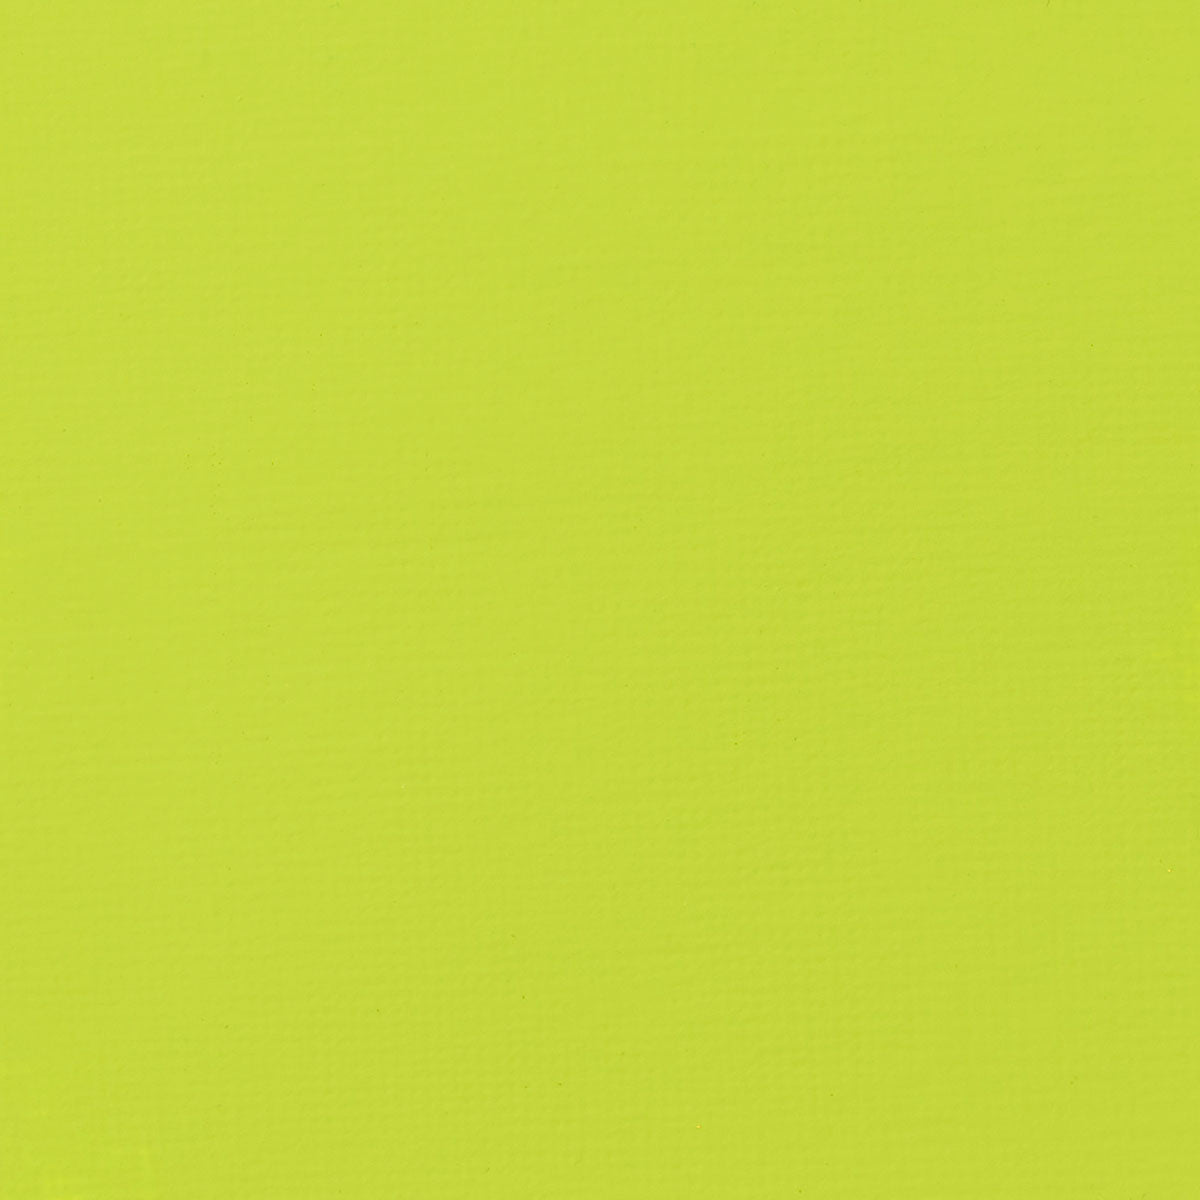 Liquitex - Acrylic Gouache 59ml S2 - Vivid Lime Green